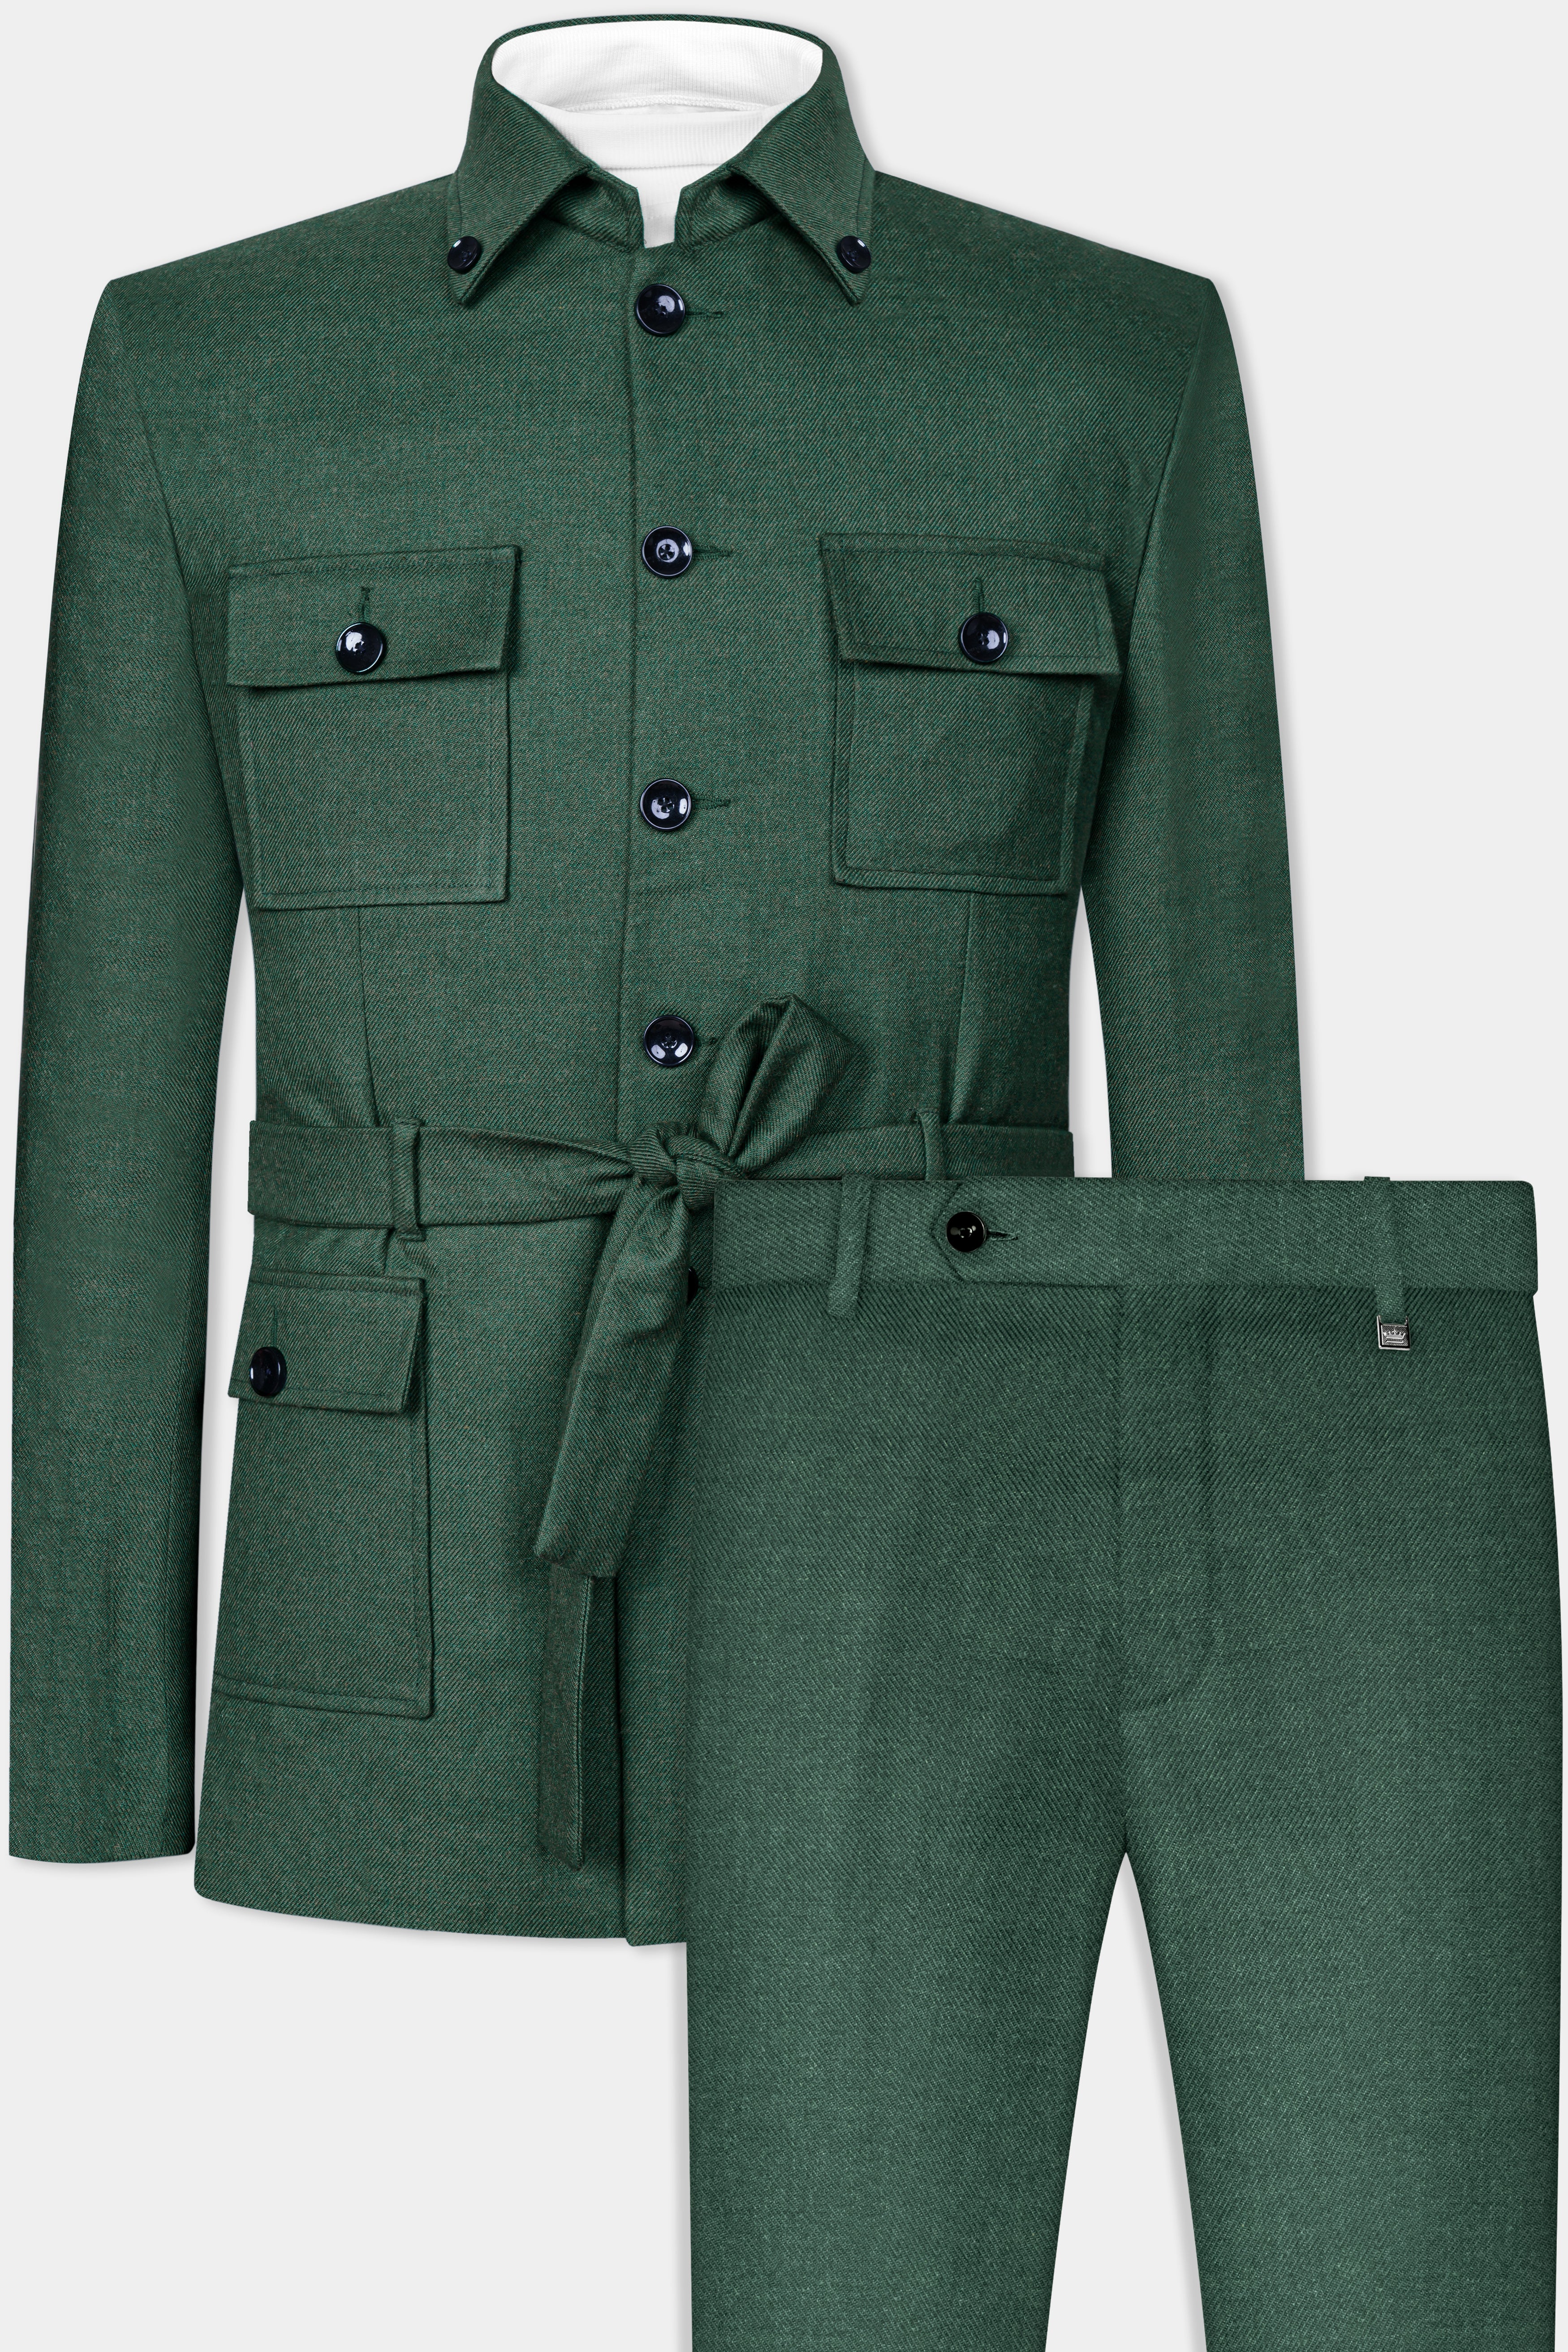 Plantation Green Tweed Designer Jacket Suit With Functional Belt Fastening